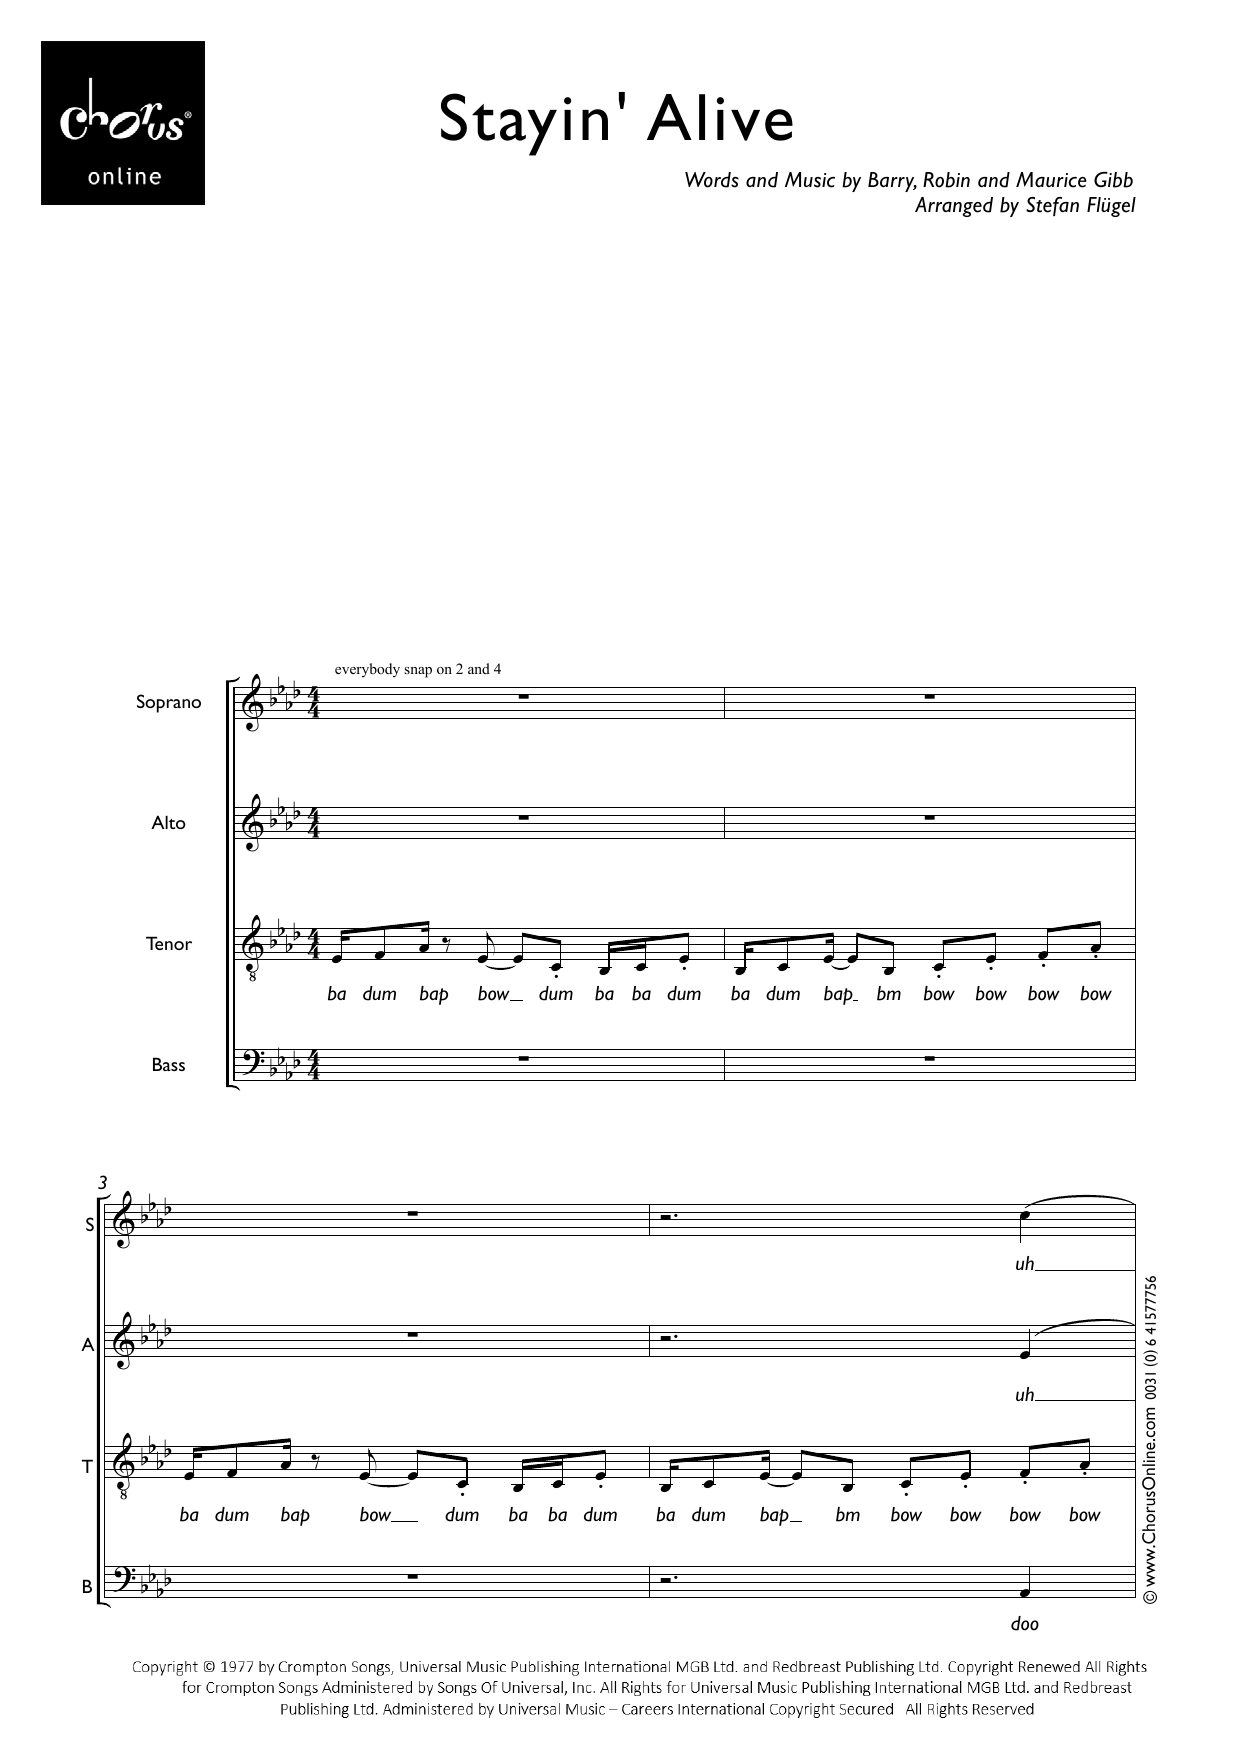 Bee Gees Stayin' Alive (arr. Stefan Flügel) sheet music notes printable PDF score